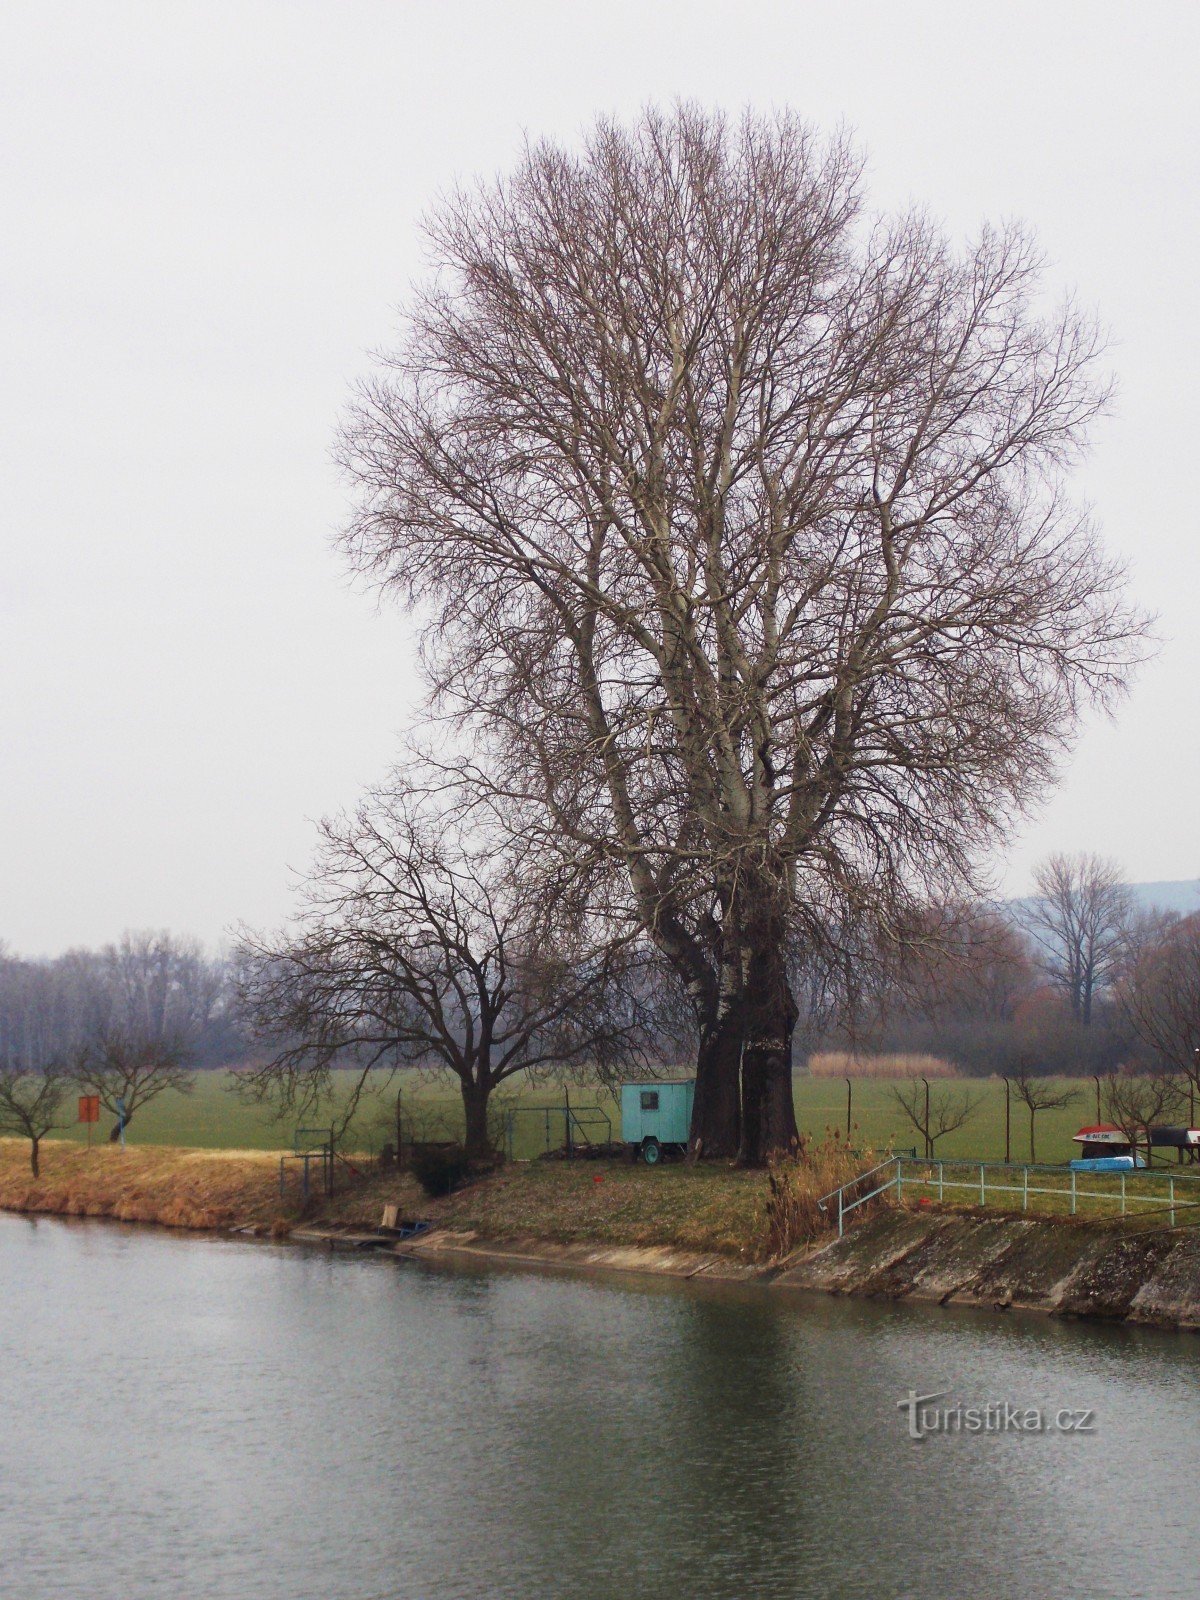 Spytihněv, technikai látnivalók a Morava folyón